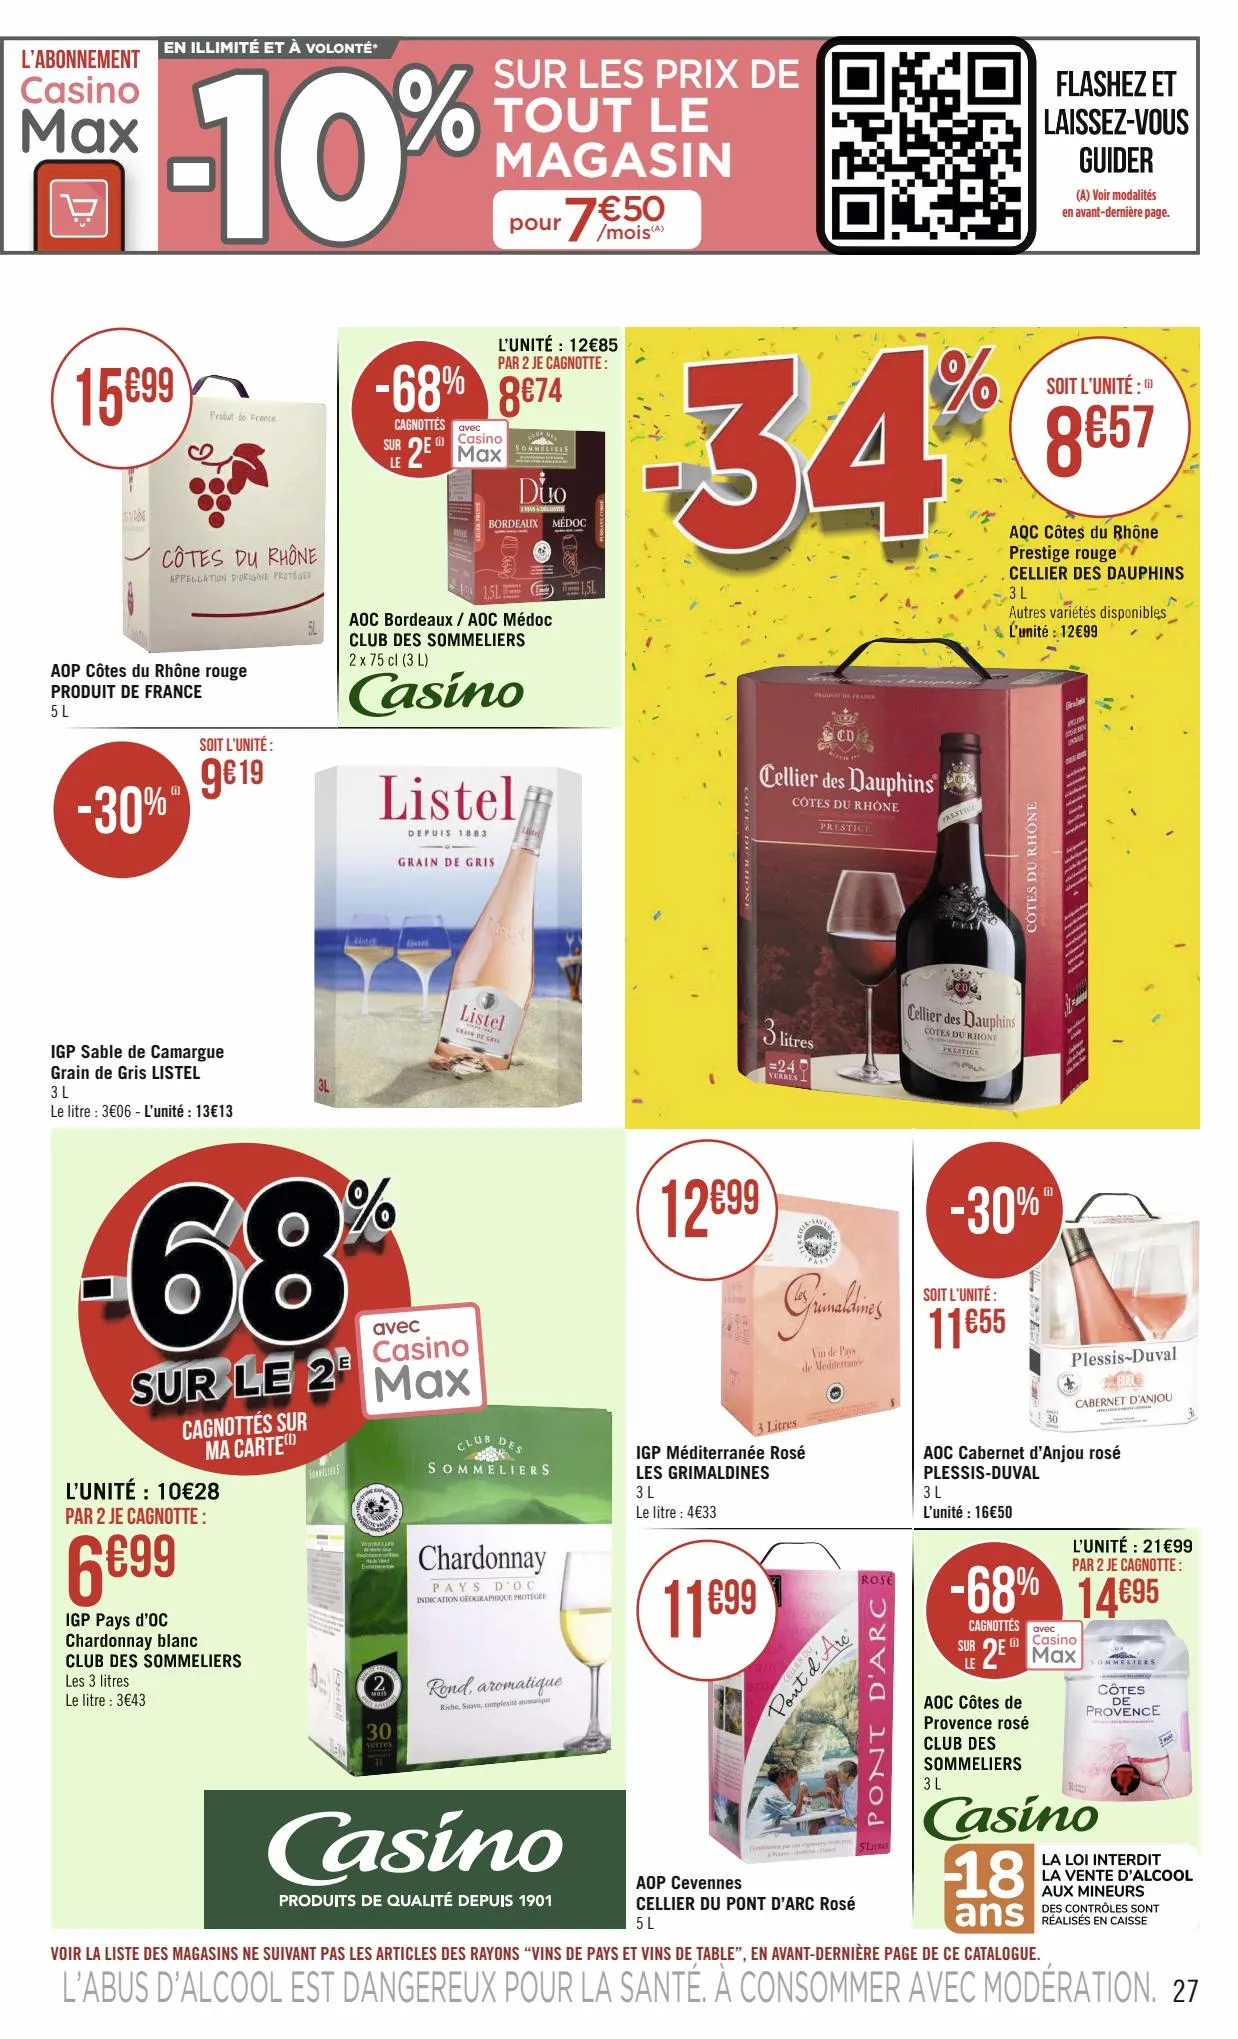 Catalogue Catalogue Casino Supermarchés, page 00027